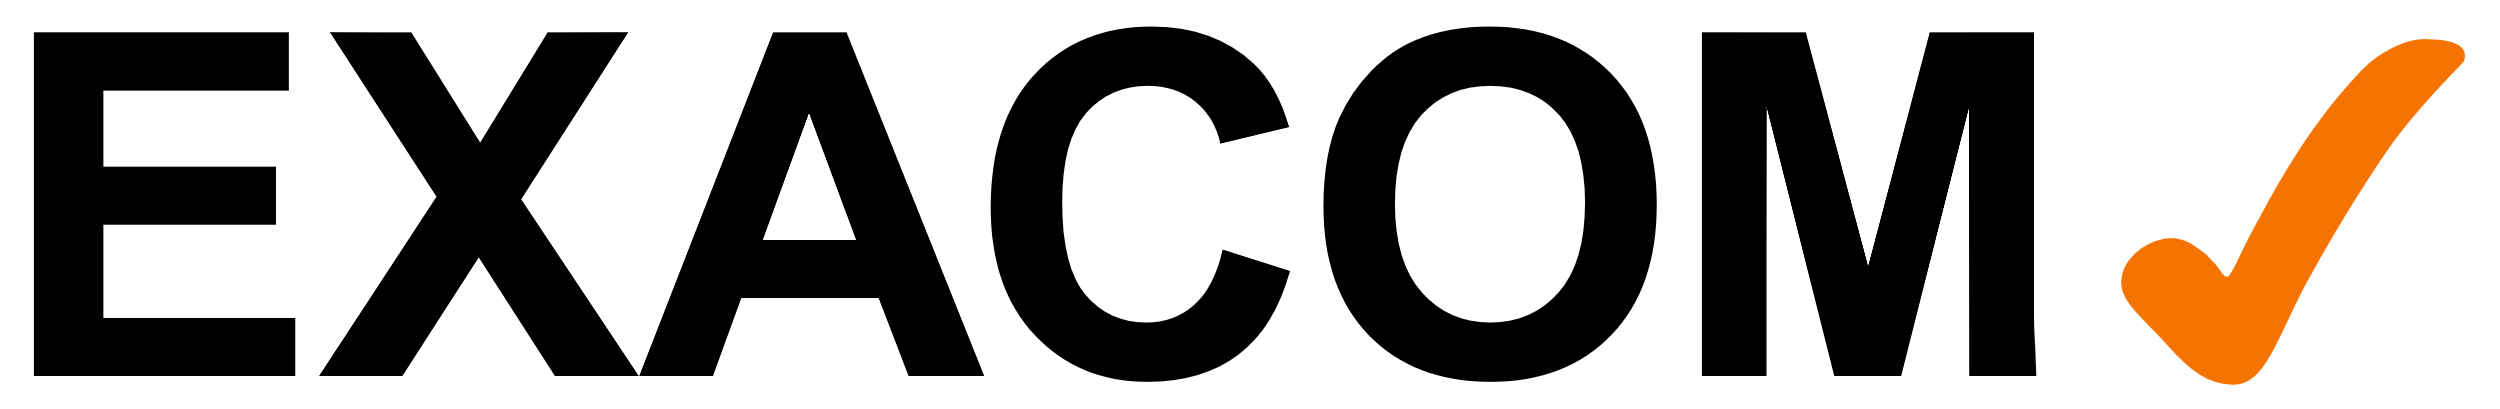 Exacom Systems logo